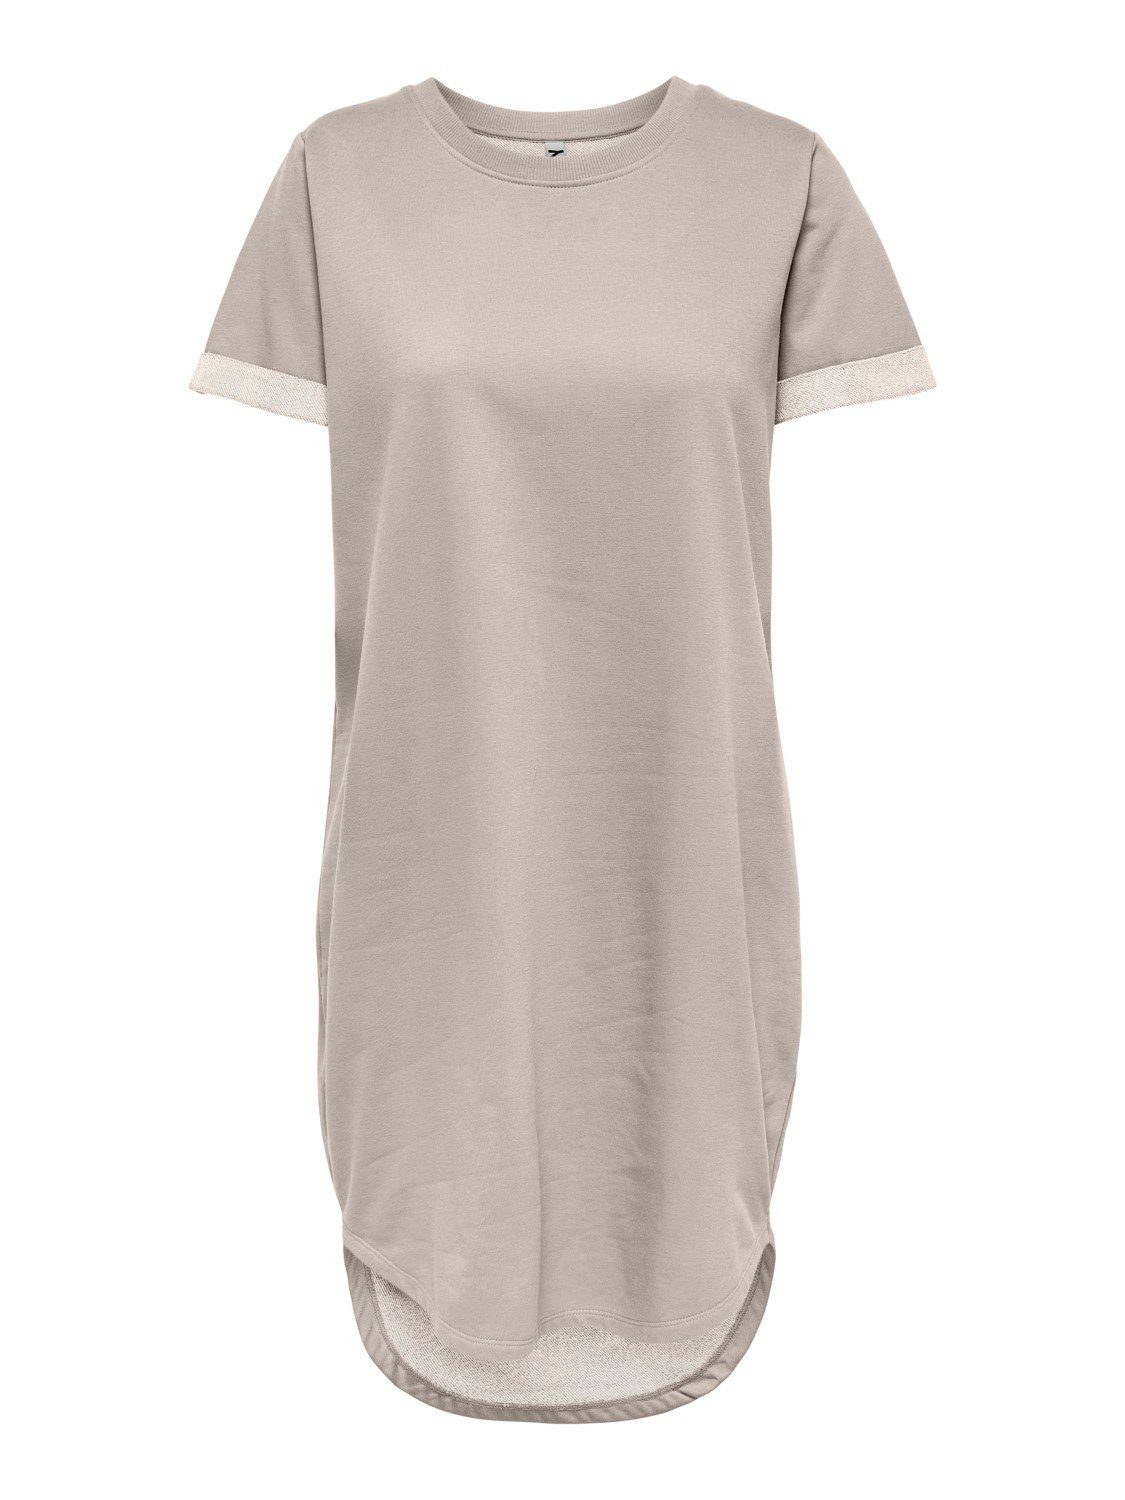 JDYIVY Kleid Shirtkleid Tunika Beige Rundhals JACQUELINE Shirtkleid YONG de (lang, Midi in 3606 1-tlg) Dress Lockeres